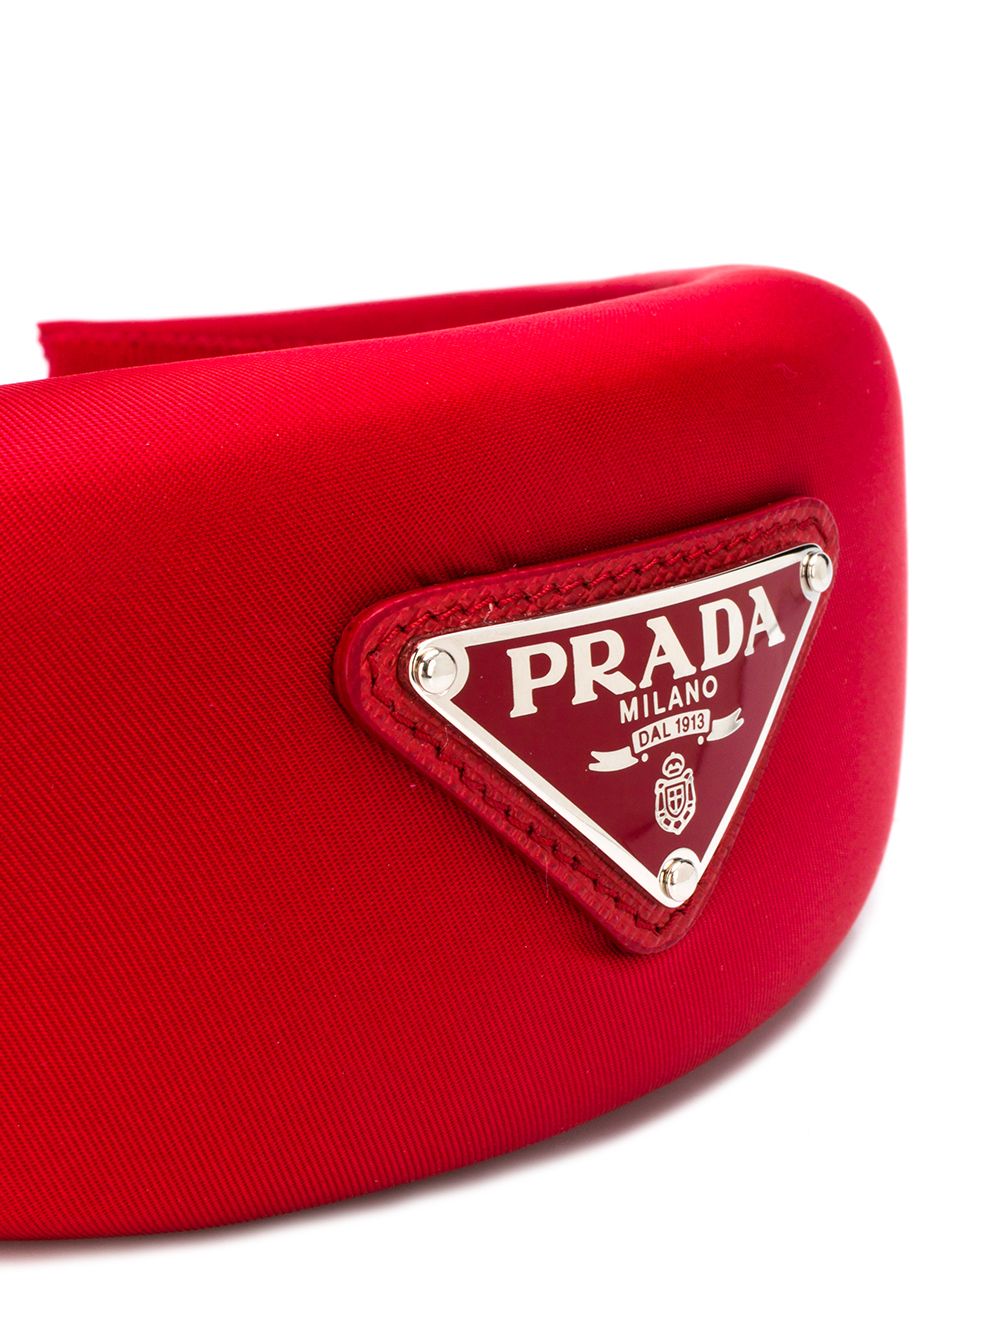 фото Prada ободок с металлическим логотипом